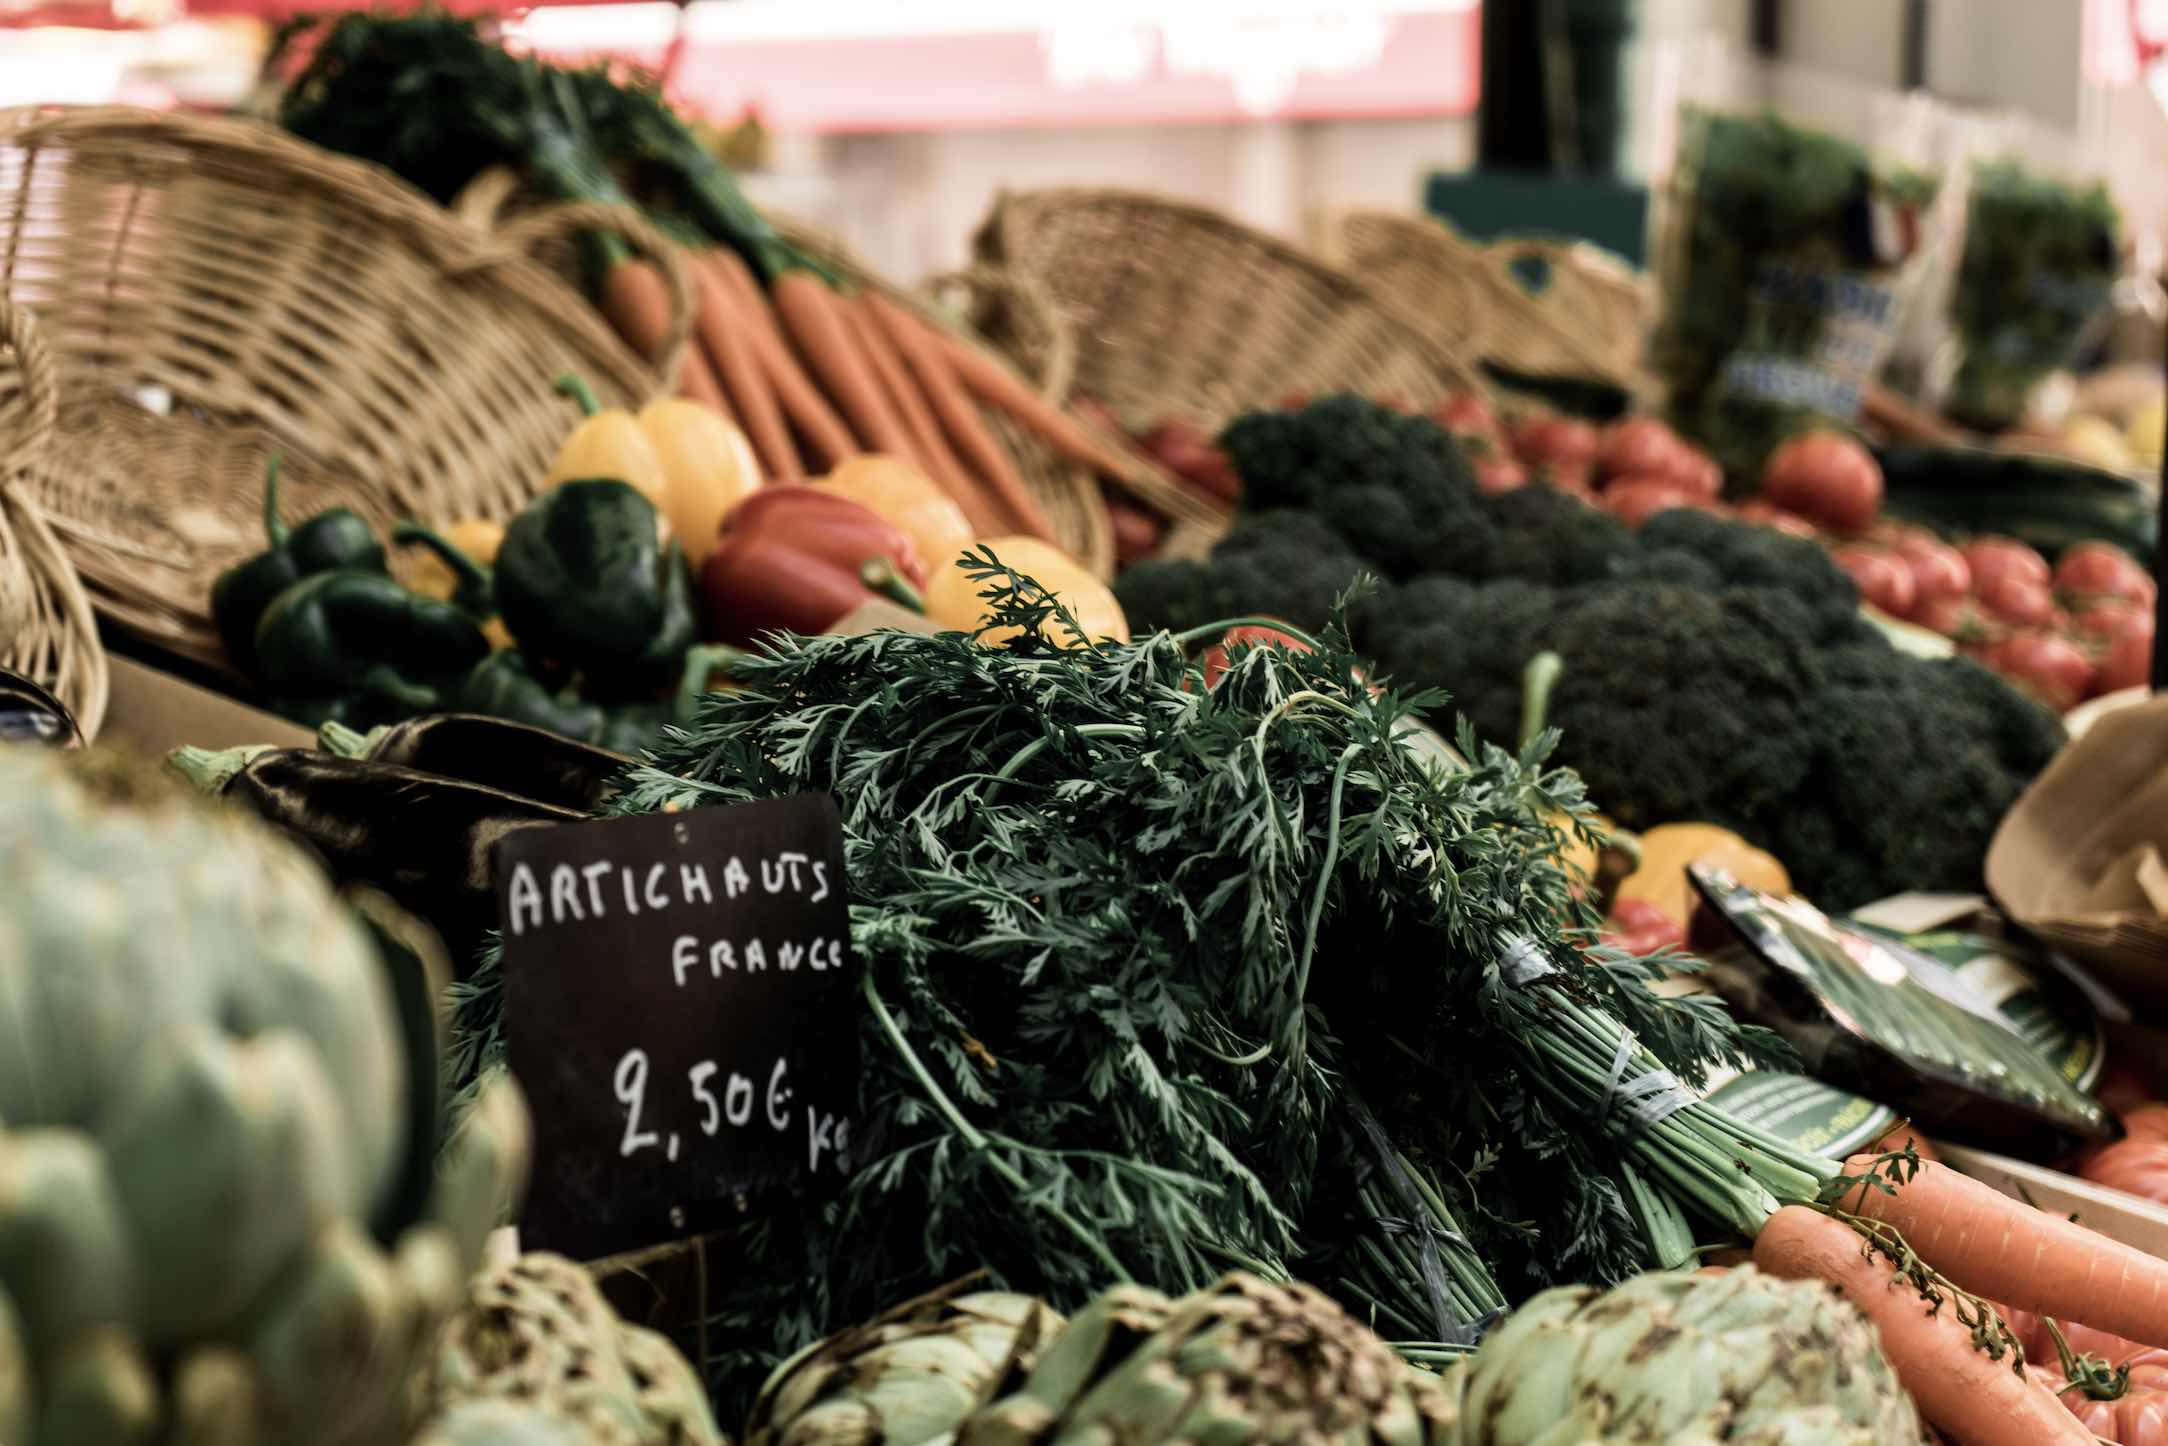 Paris Street Markets vegetables on display